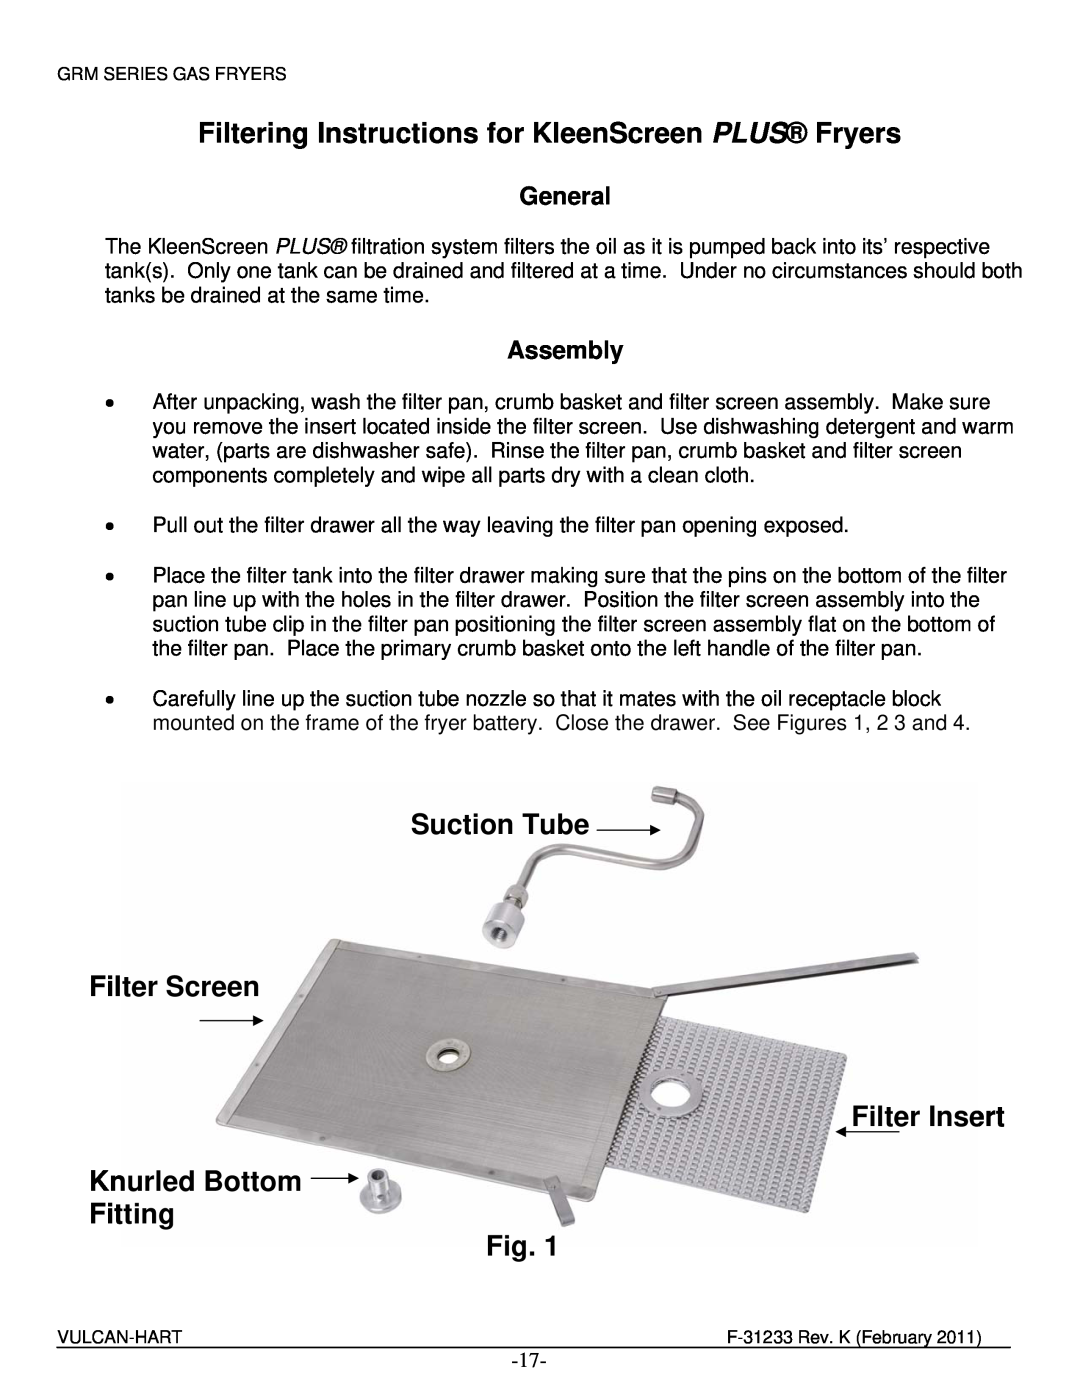 Vulcan-Hart 3GR65MF ML-136421 Suction Tube Filter Screen Filter Insert, Knurled Bottom Fitting Fig, General, Assembly 